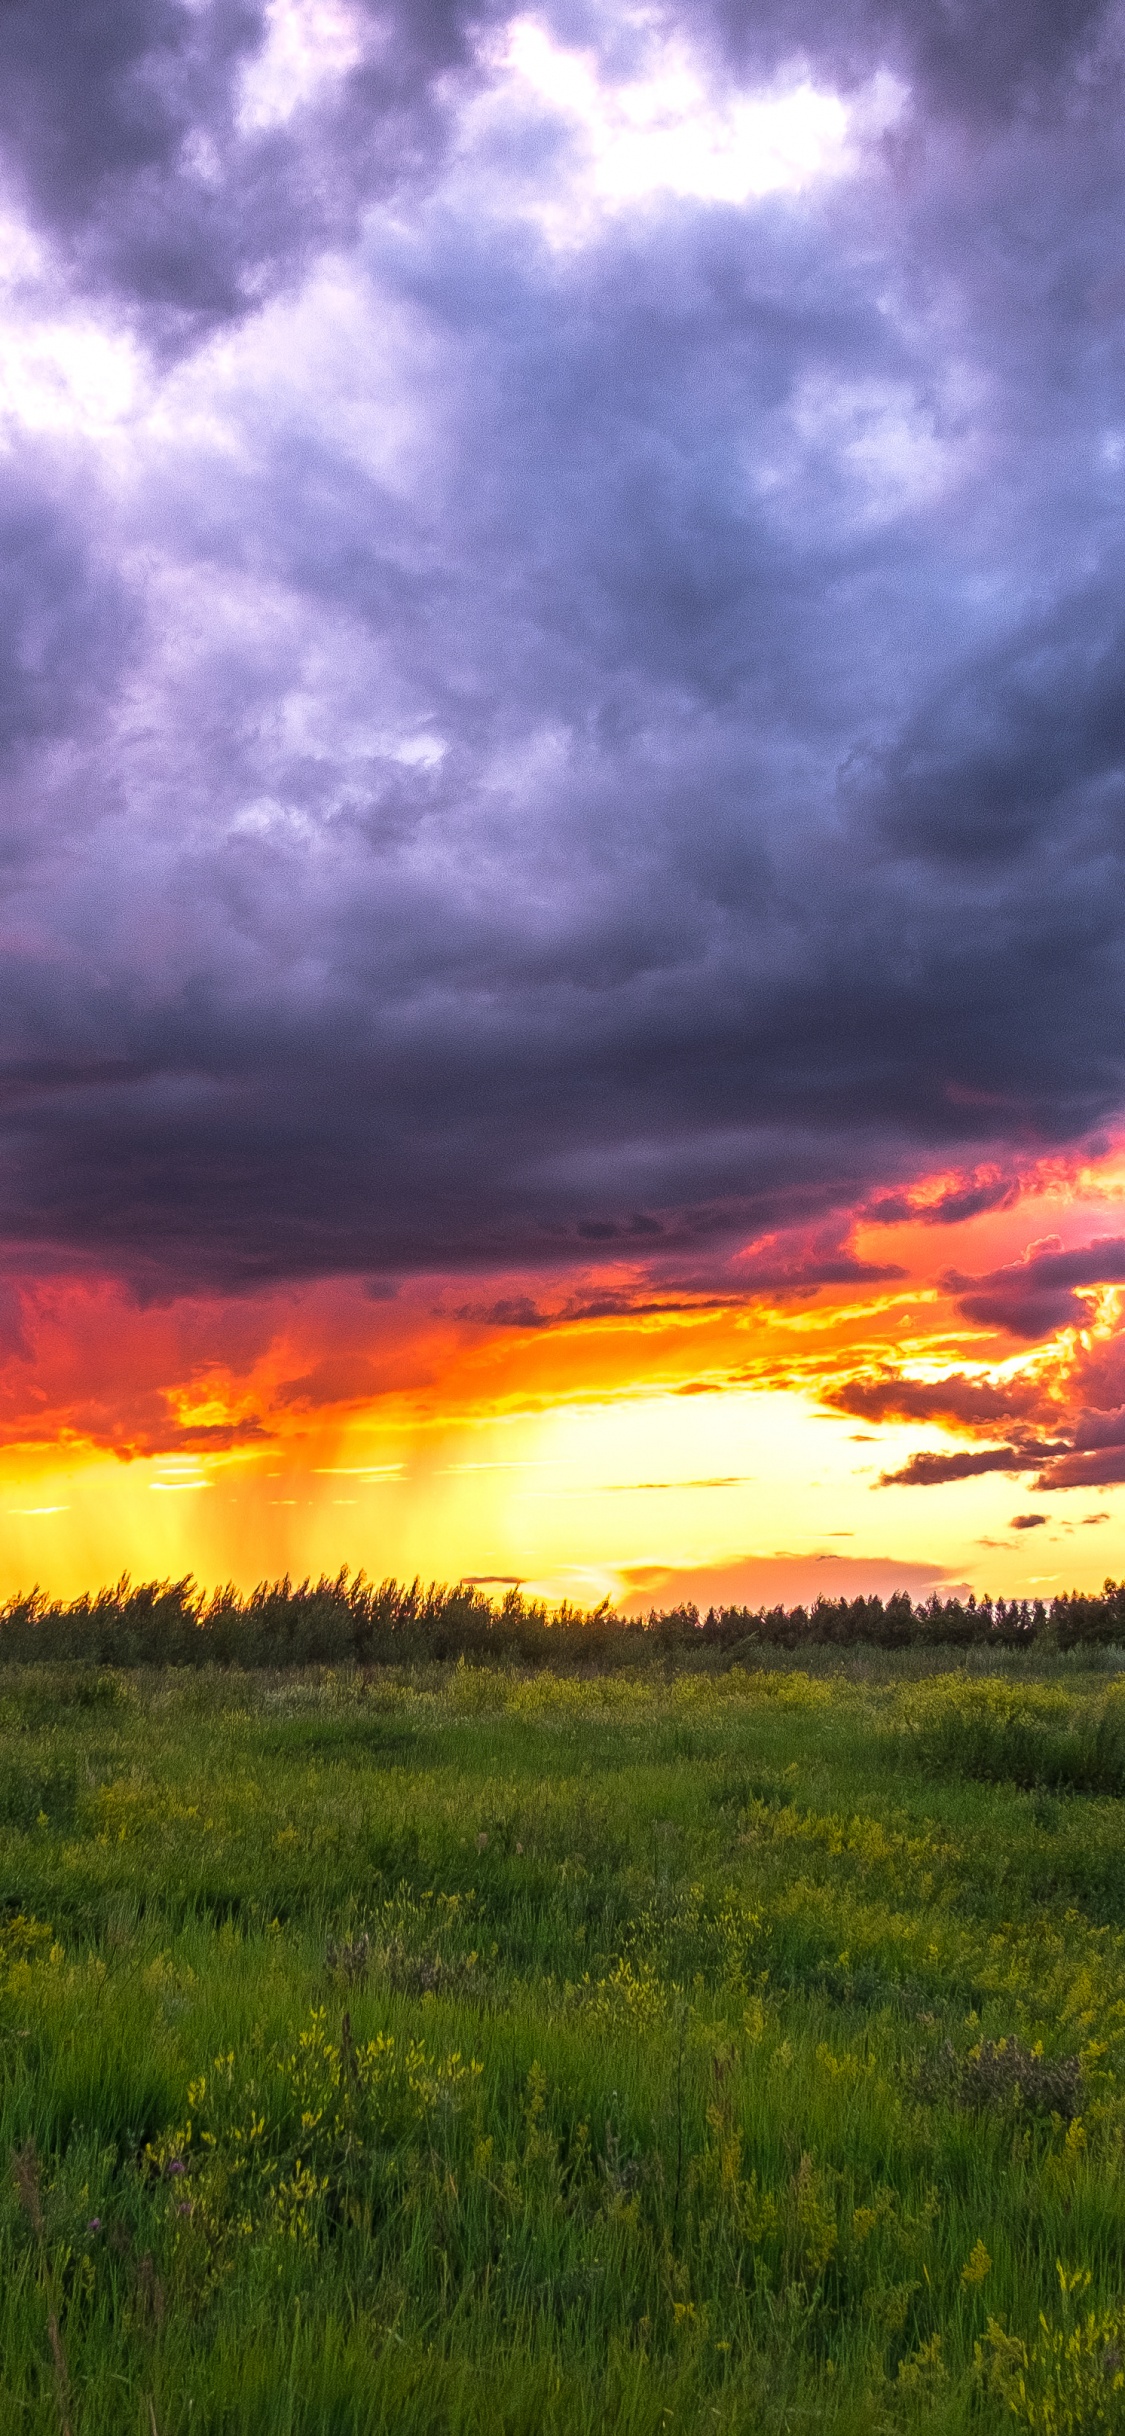 Green Grass Field Under Cloudy Sky During Sunset. Wallpaper in 1125x2436 Resolution